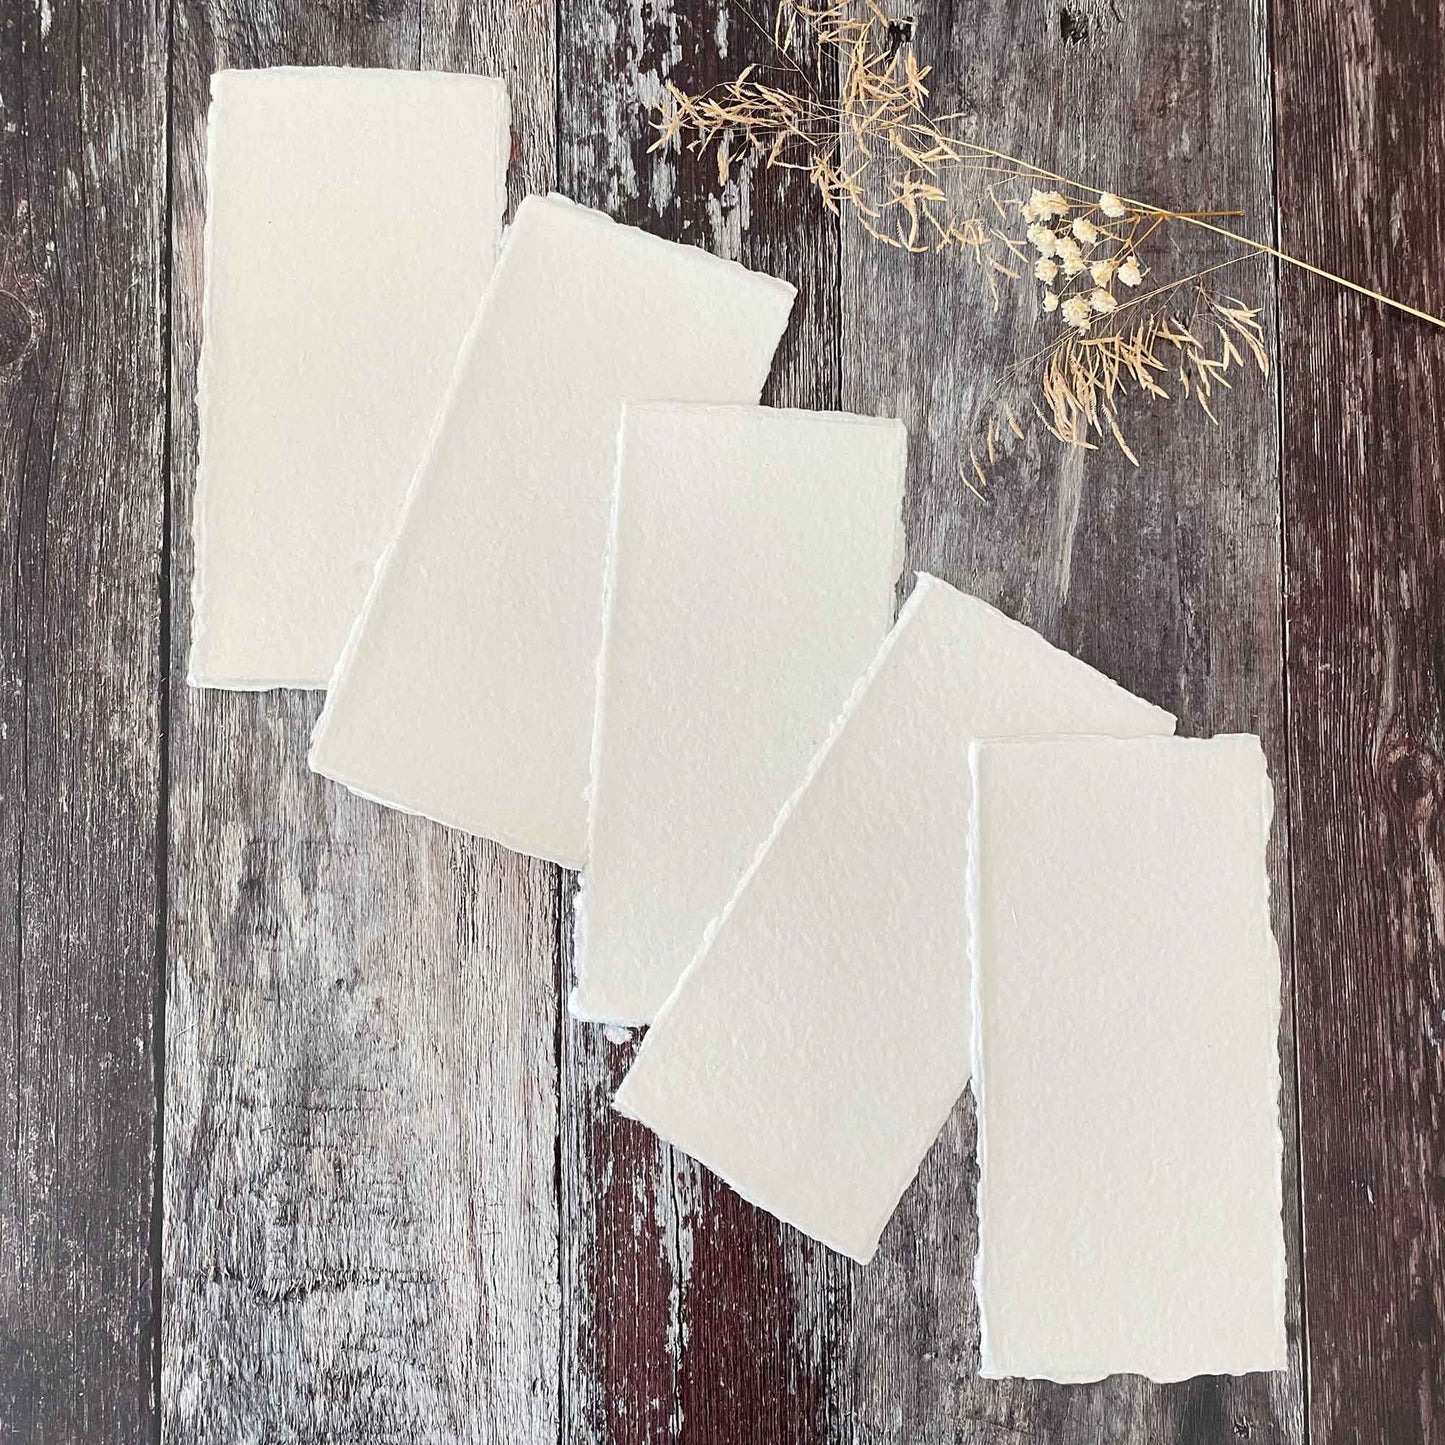 Premium White Handmade Paper, Card and Envelopes